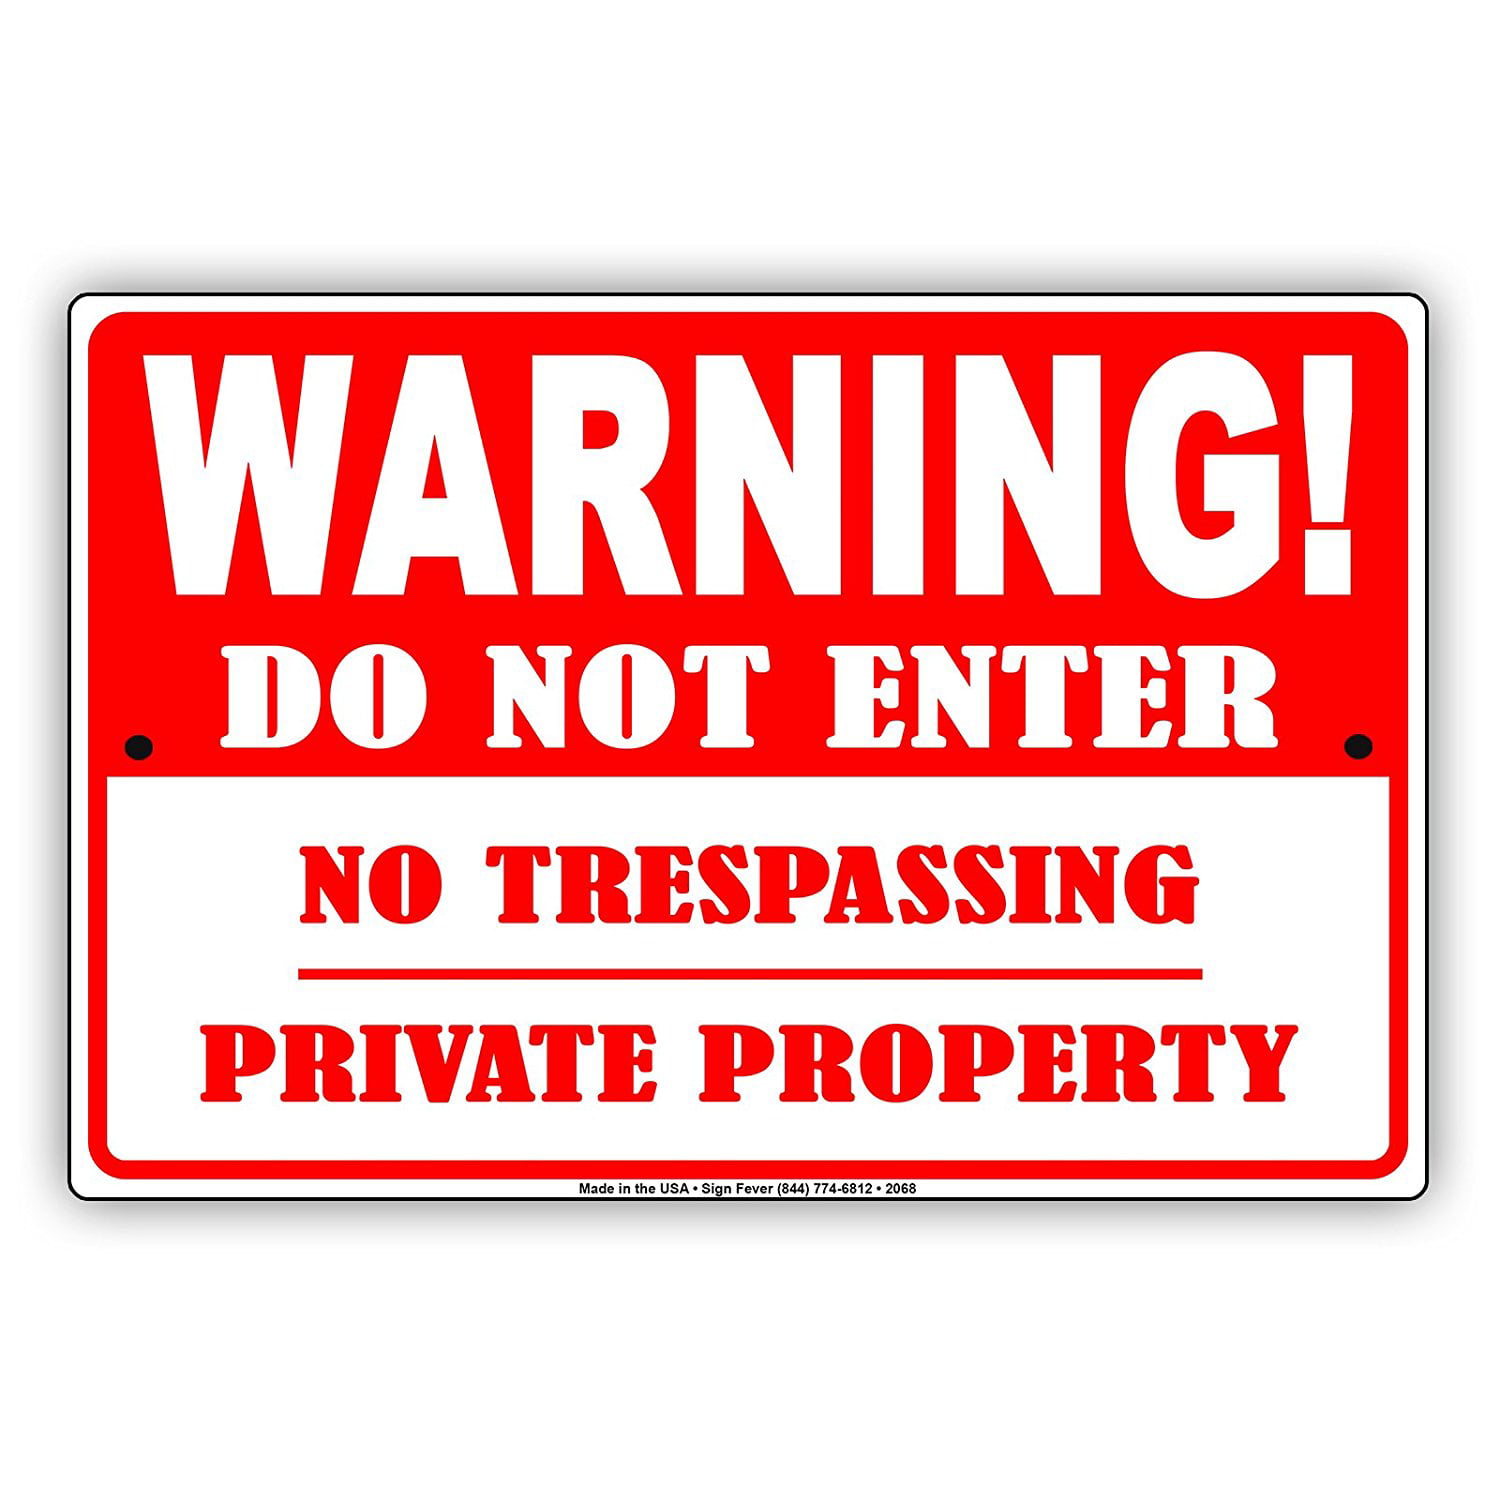 Warning Do Not Enter No Trespassing Private Property Caution Alert Warning Notice Aluminum